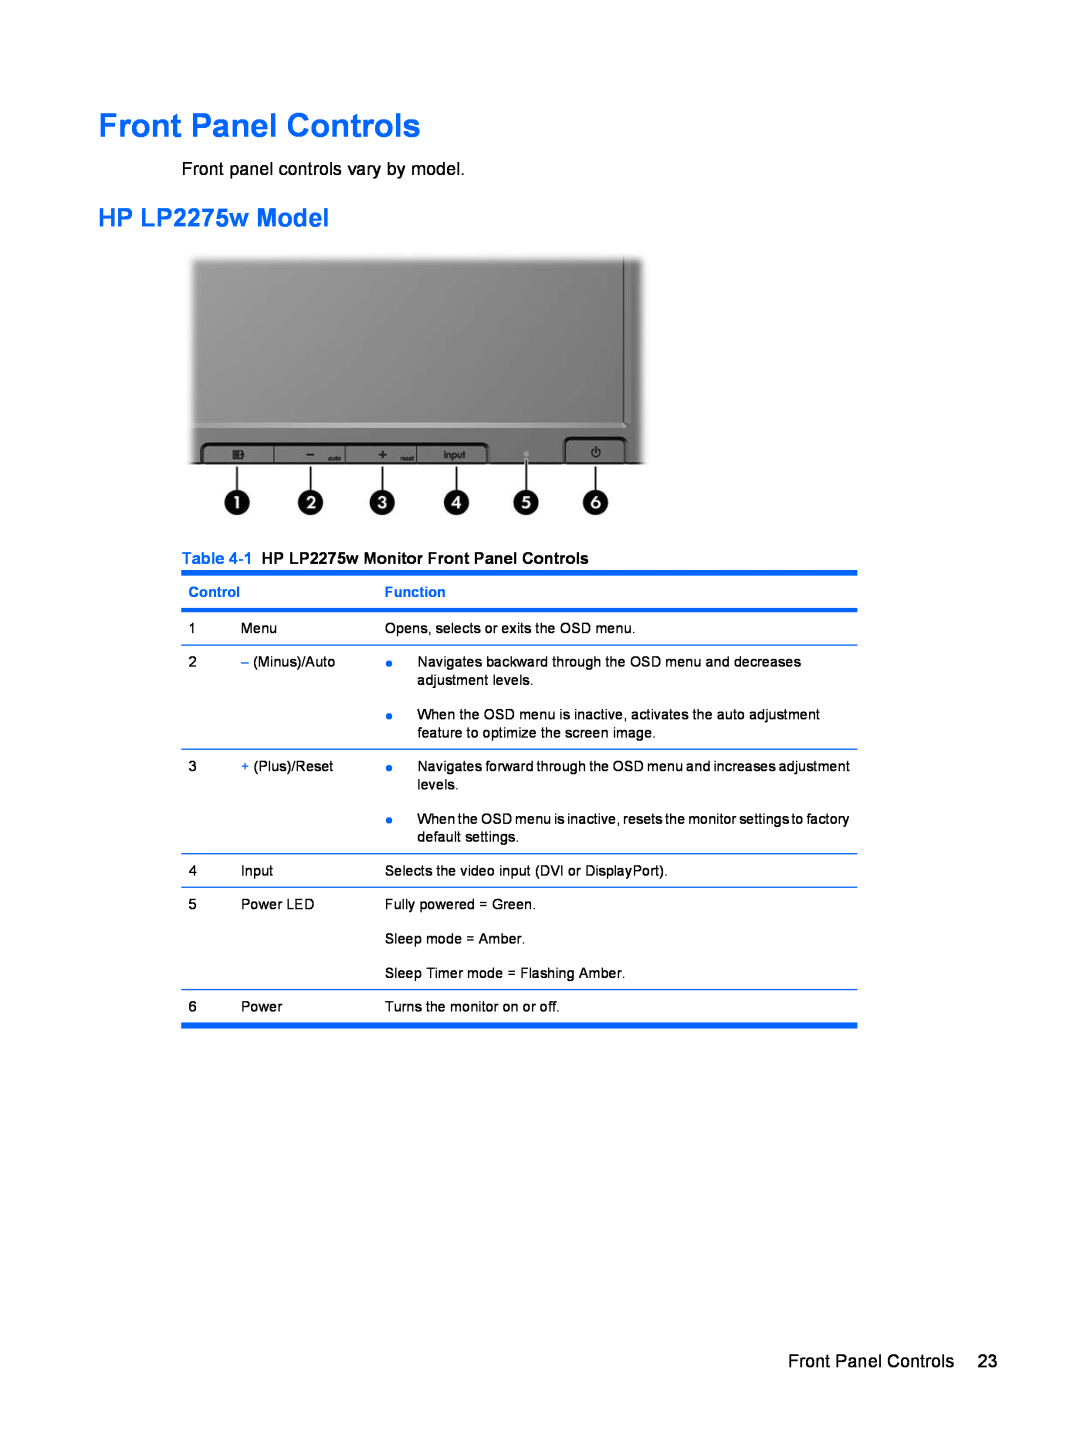 HP manual Front Panel Controls, HP LP2275w Model, Front panel controls vary by model, Function 